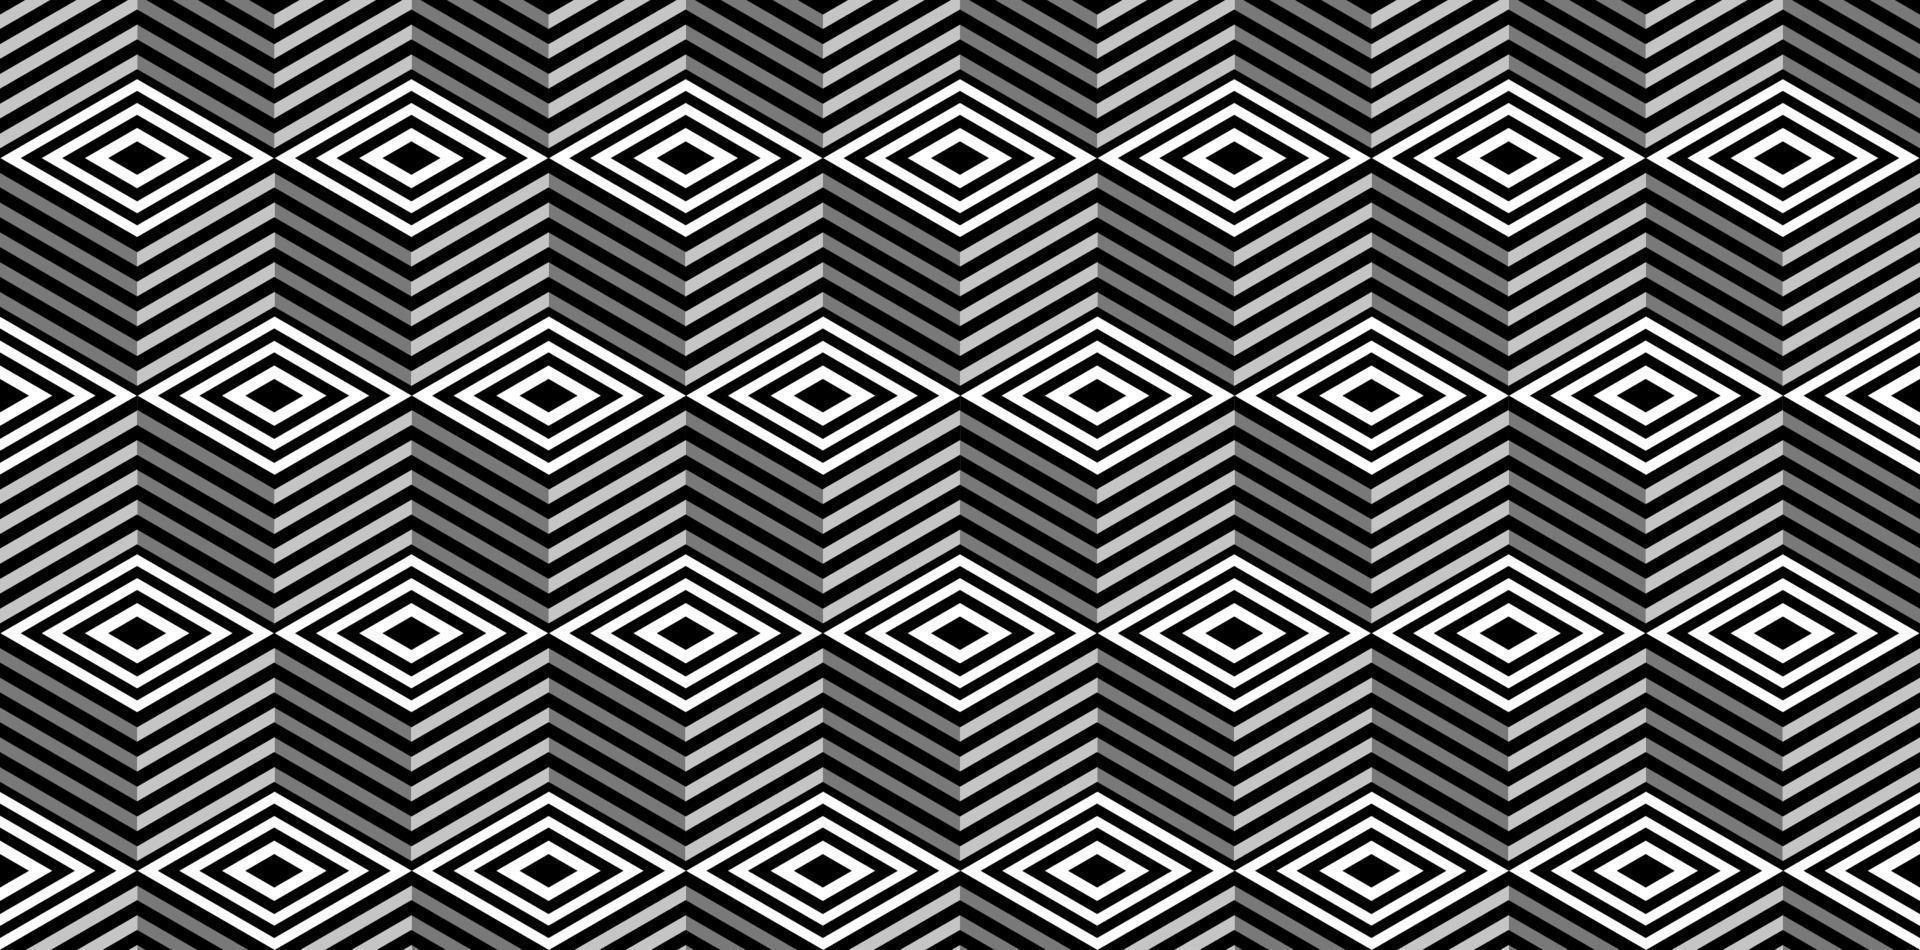 Striped cubes seamless pattern vector. Op art vector illustration.